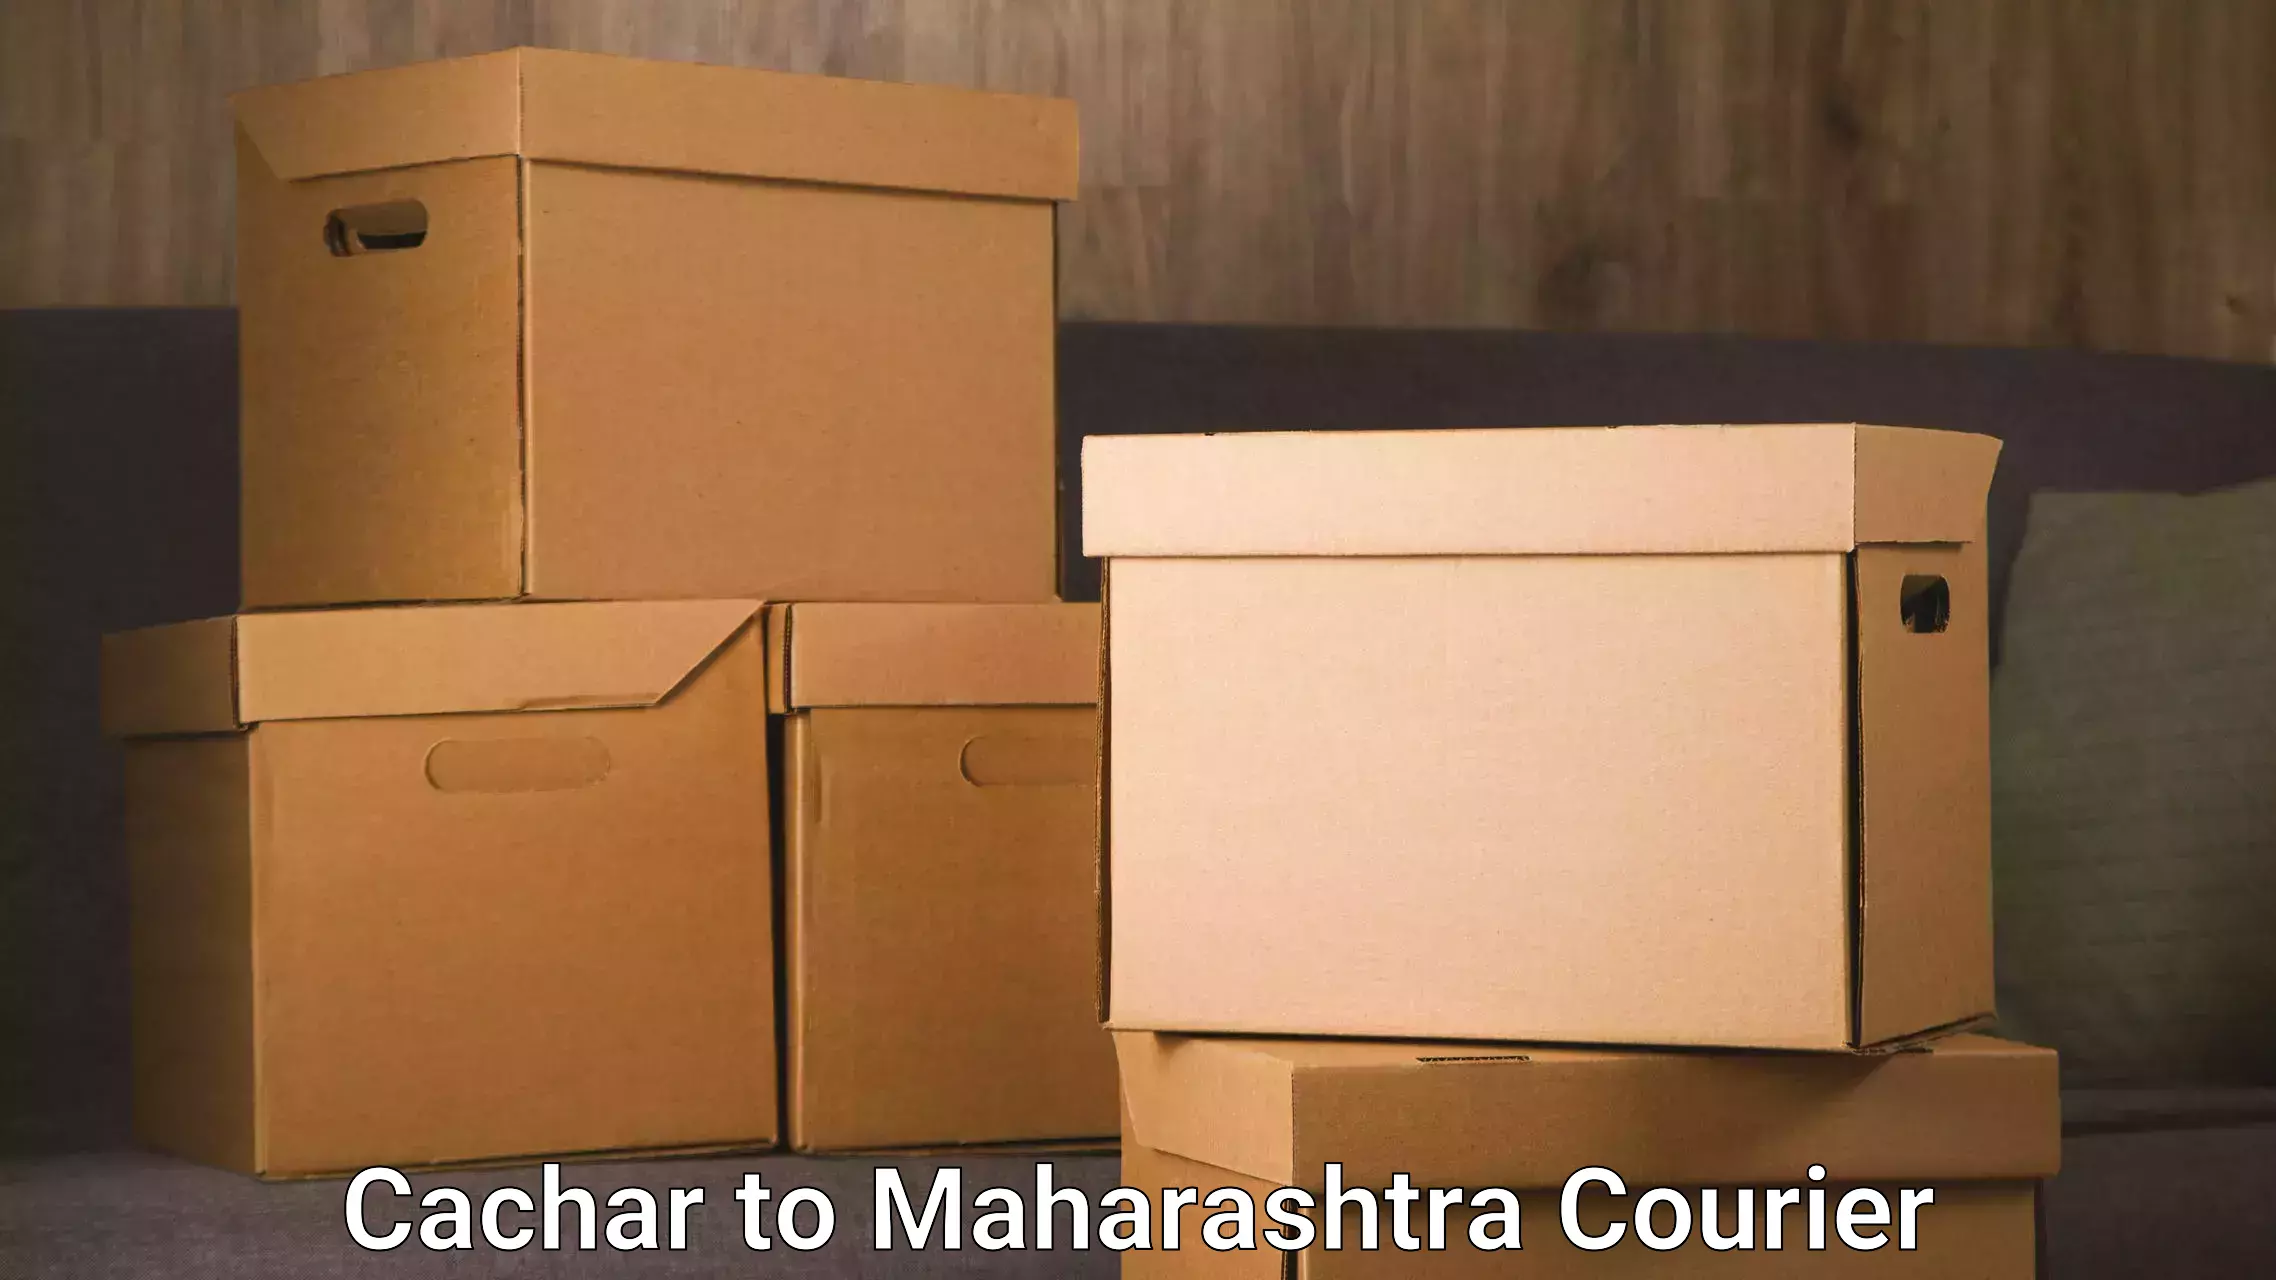 Global shipping solutions Cachar to Nandurbar